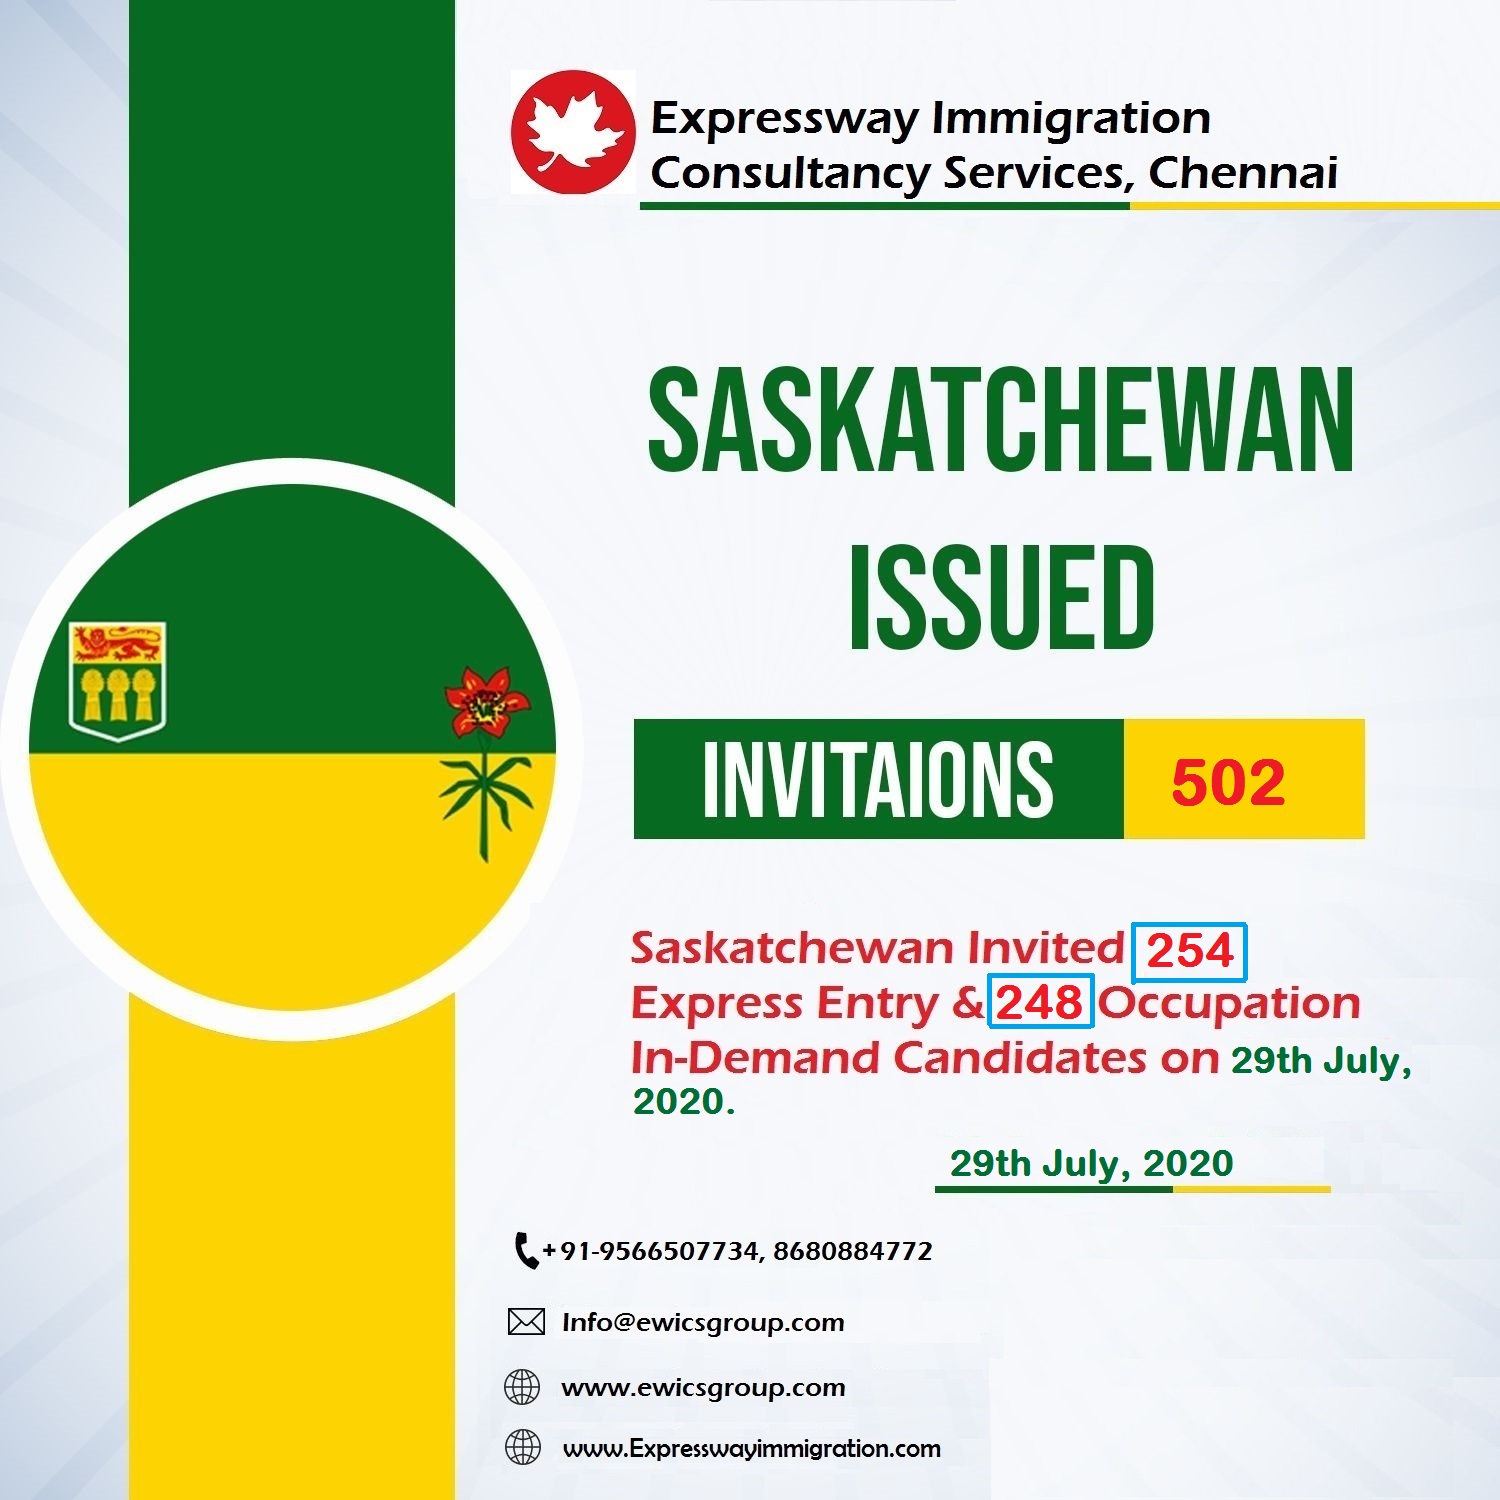 Latest Saskatchewan EOI Draws Invite Express Entry